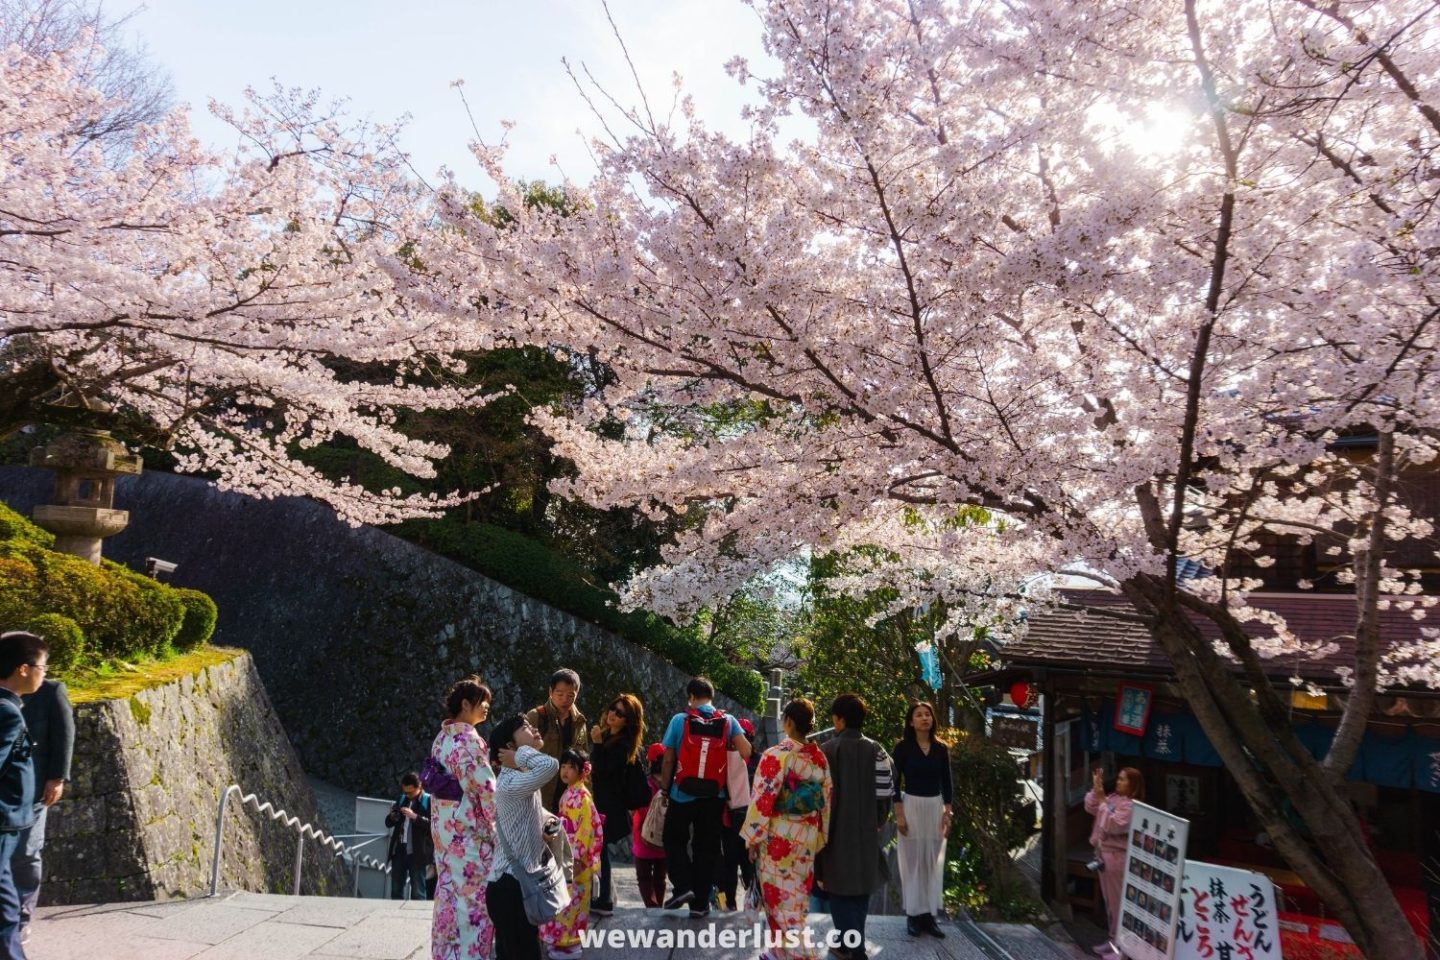 people viewing cherry blossoms in japan
hanami season wewanderlust.co